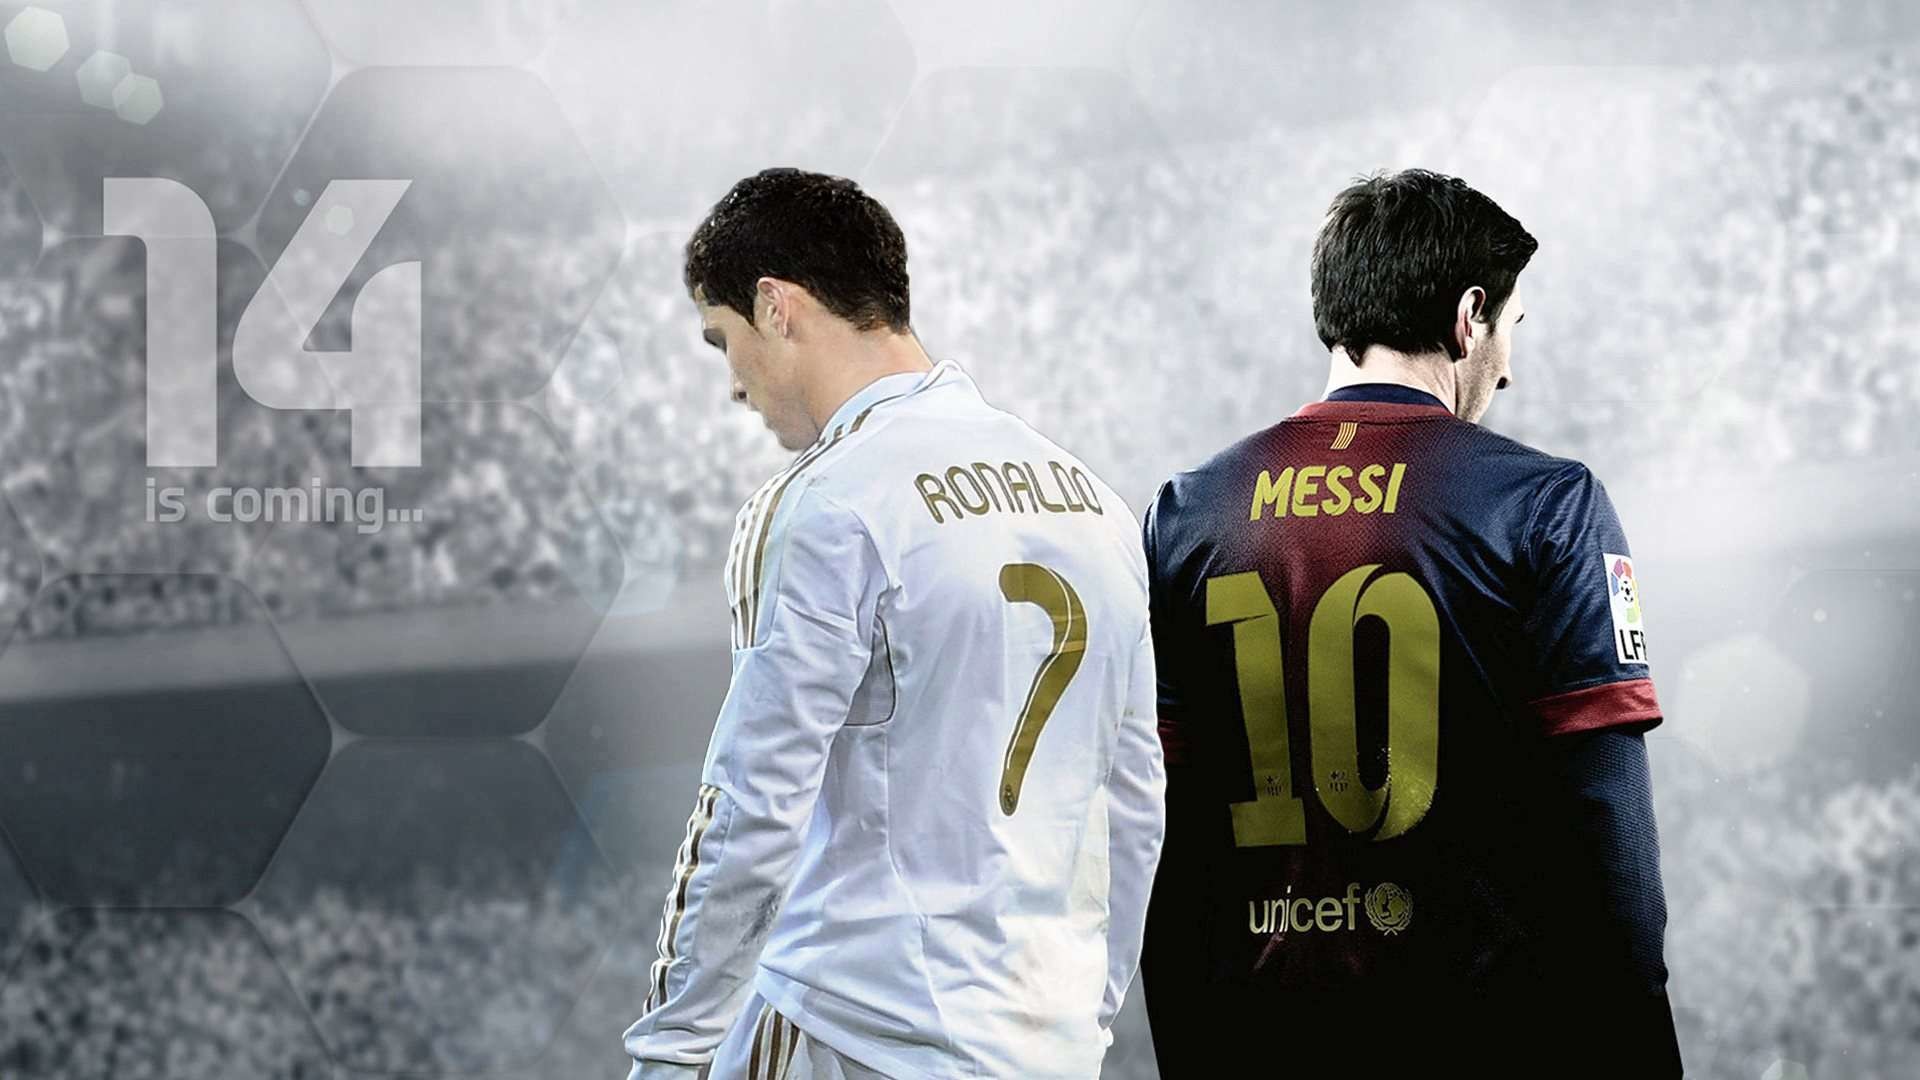 1920x1080 Computer Messi Vs Ronaldo Wallpapers - HD Wallpapers